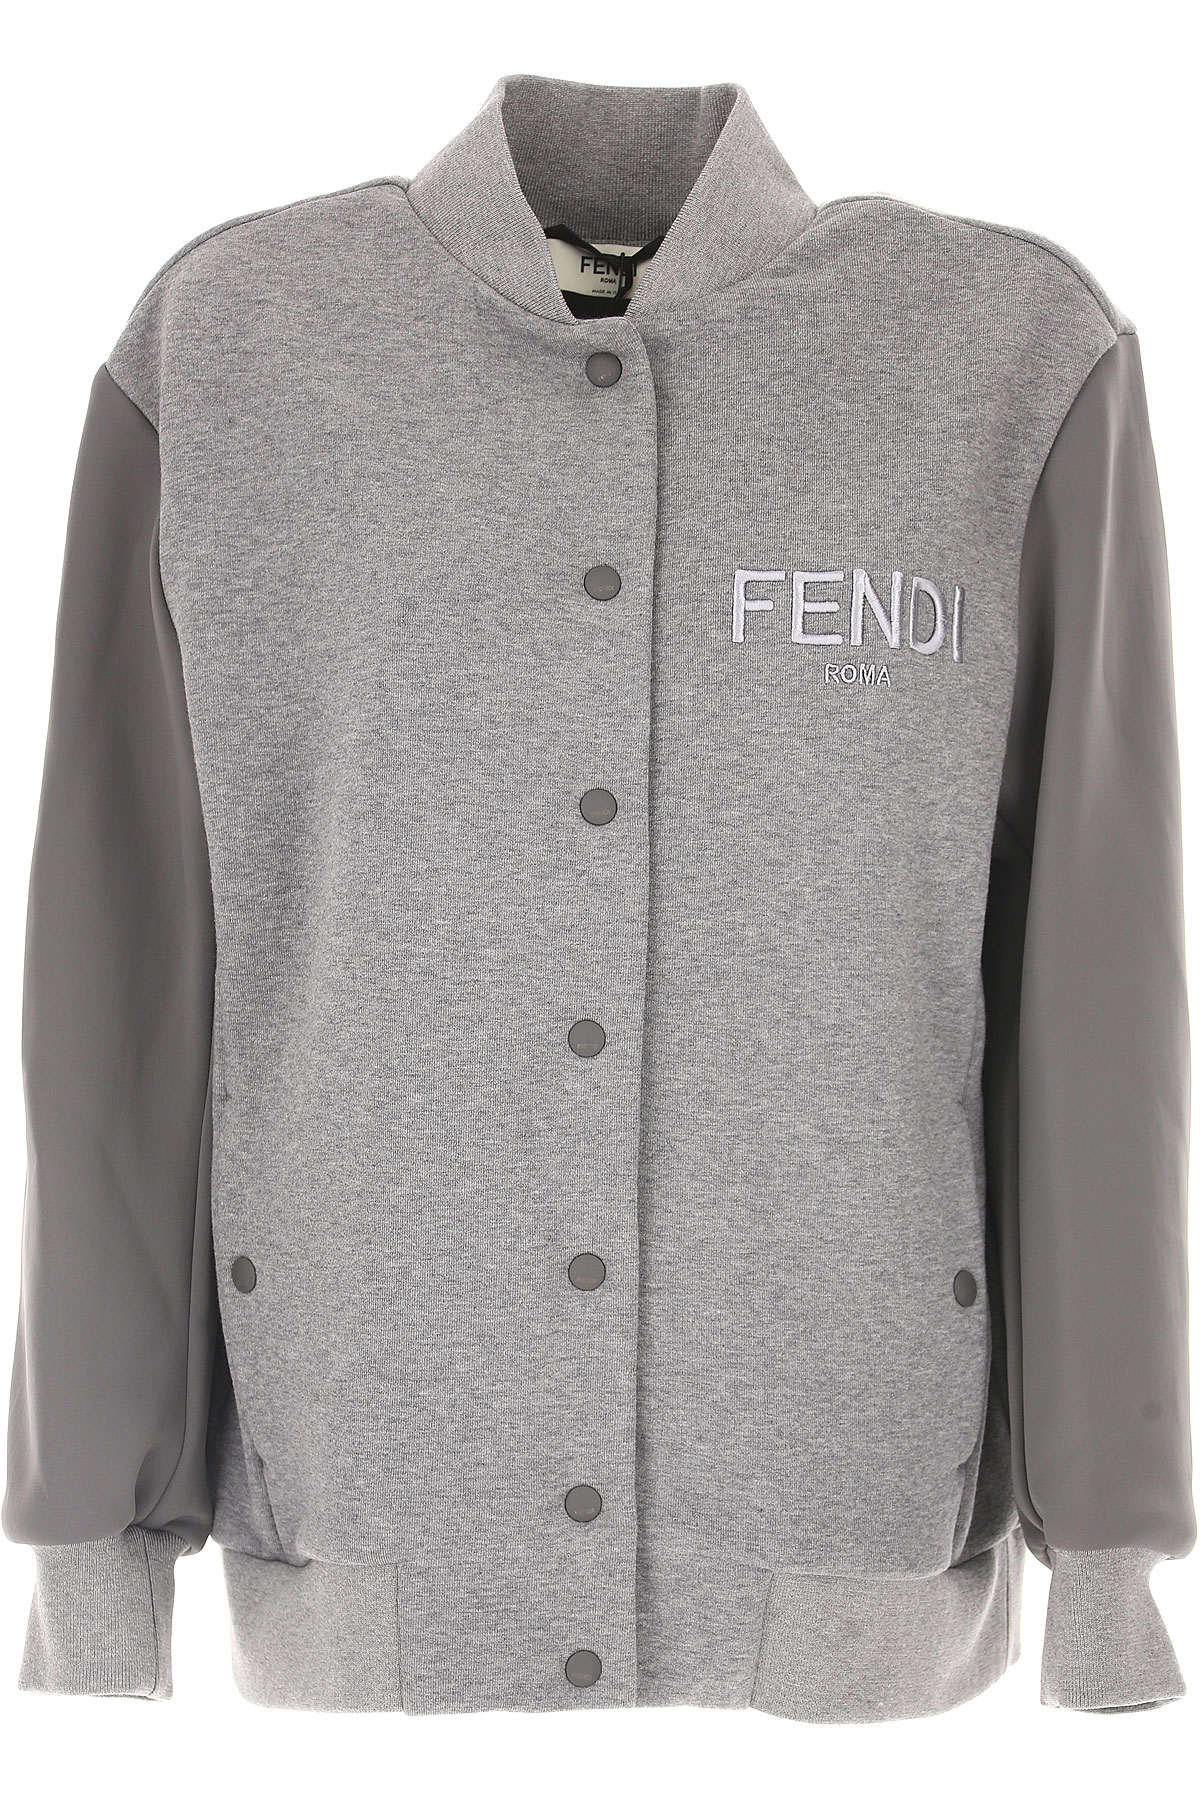 Fendi Sweatshirt for Women , Gris, Coton, 2017, 38 40